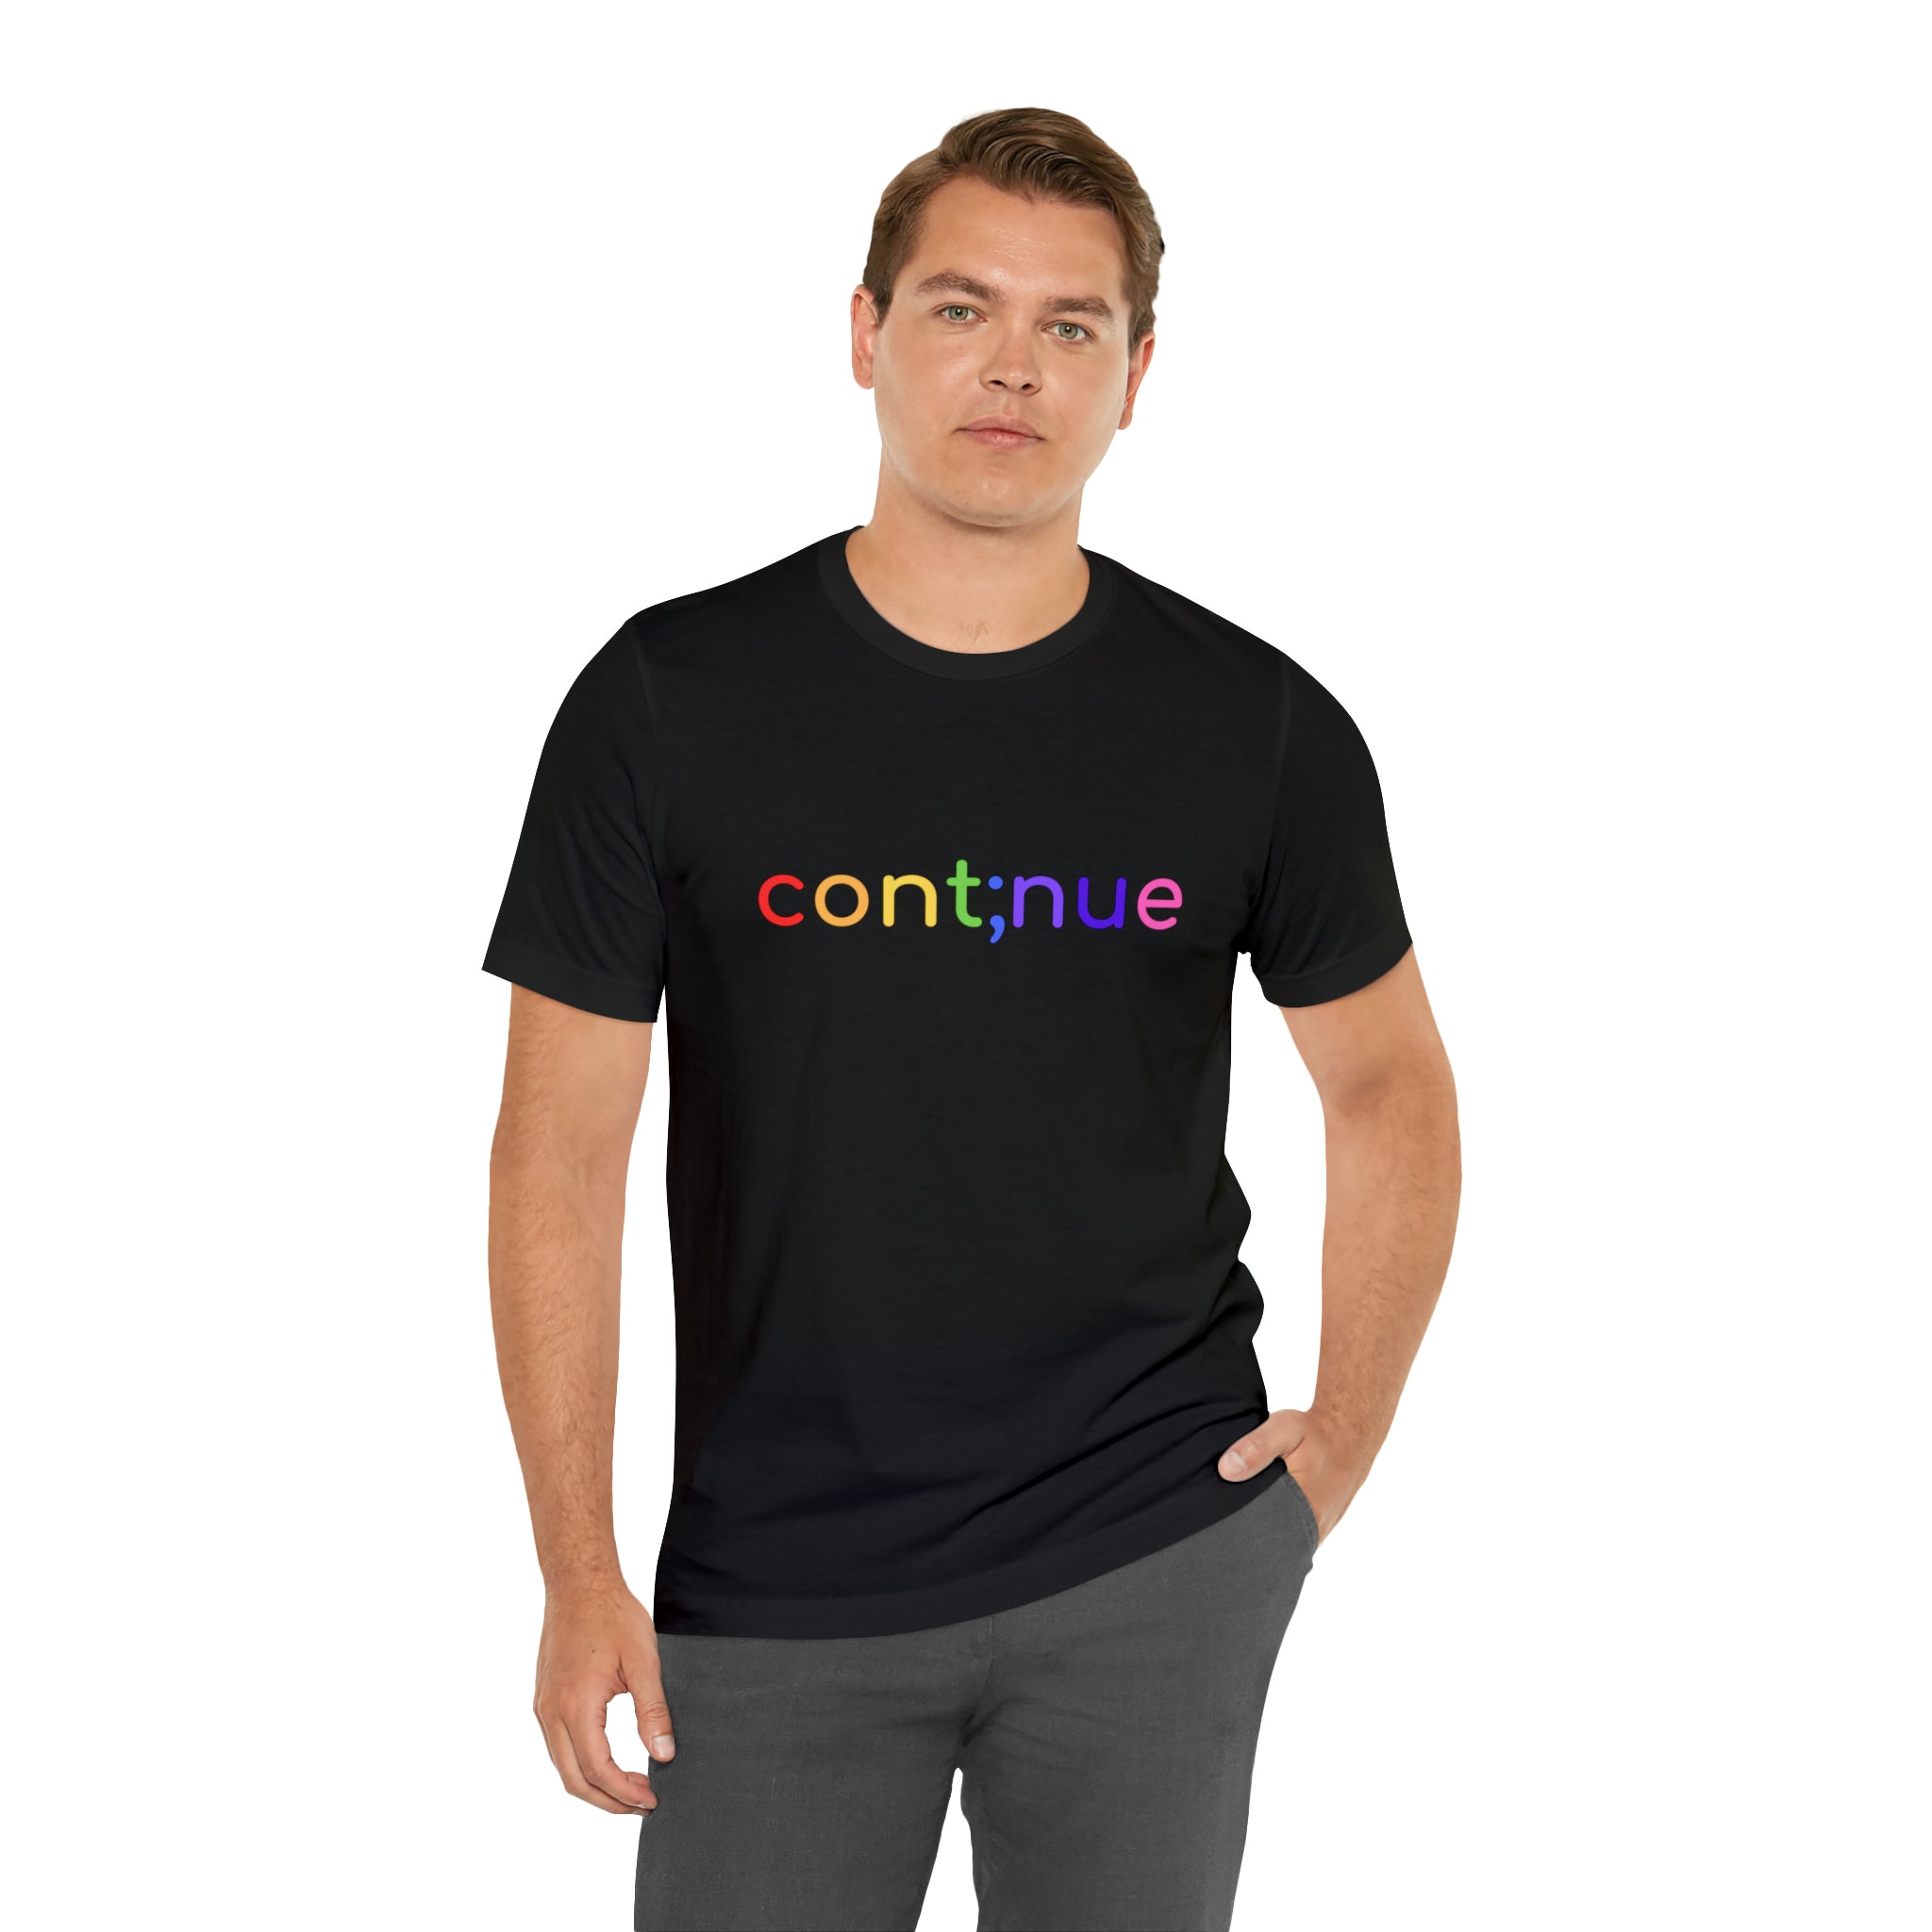 Continue PRIDE T-Shirt